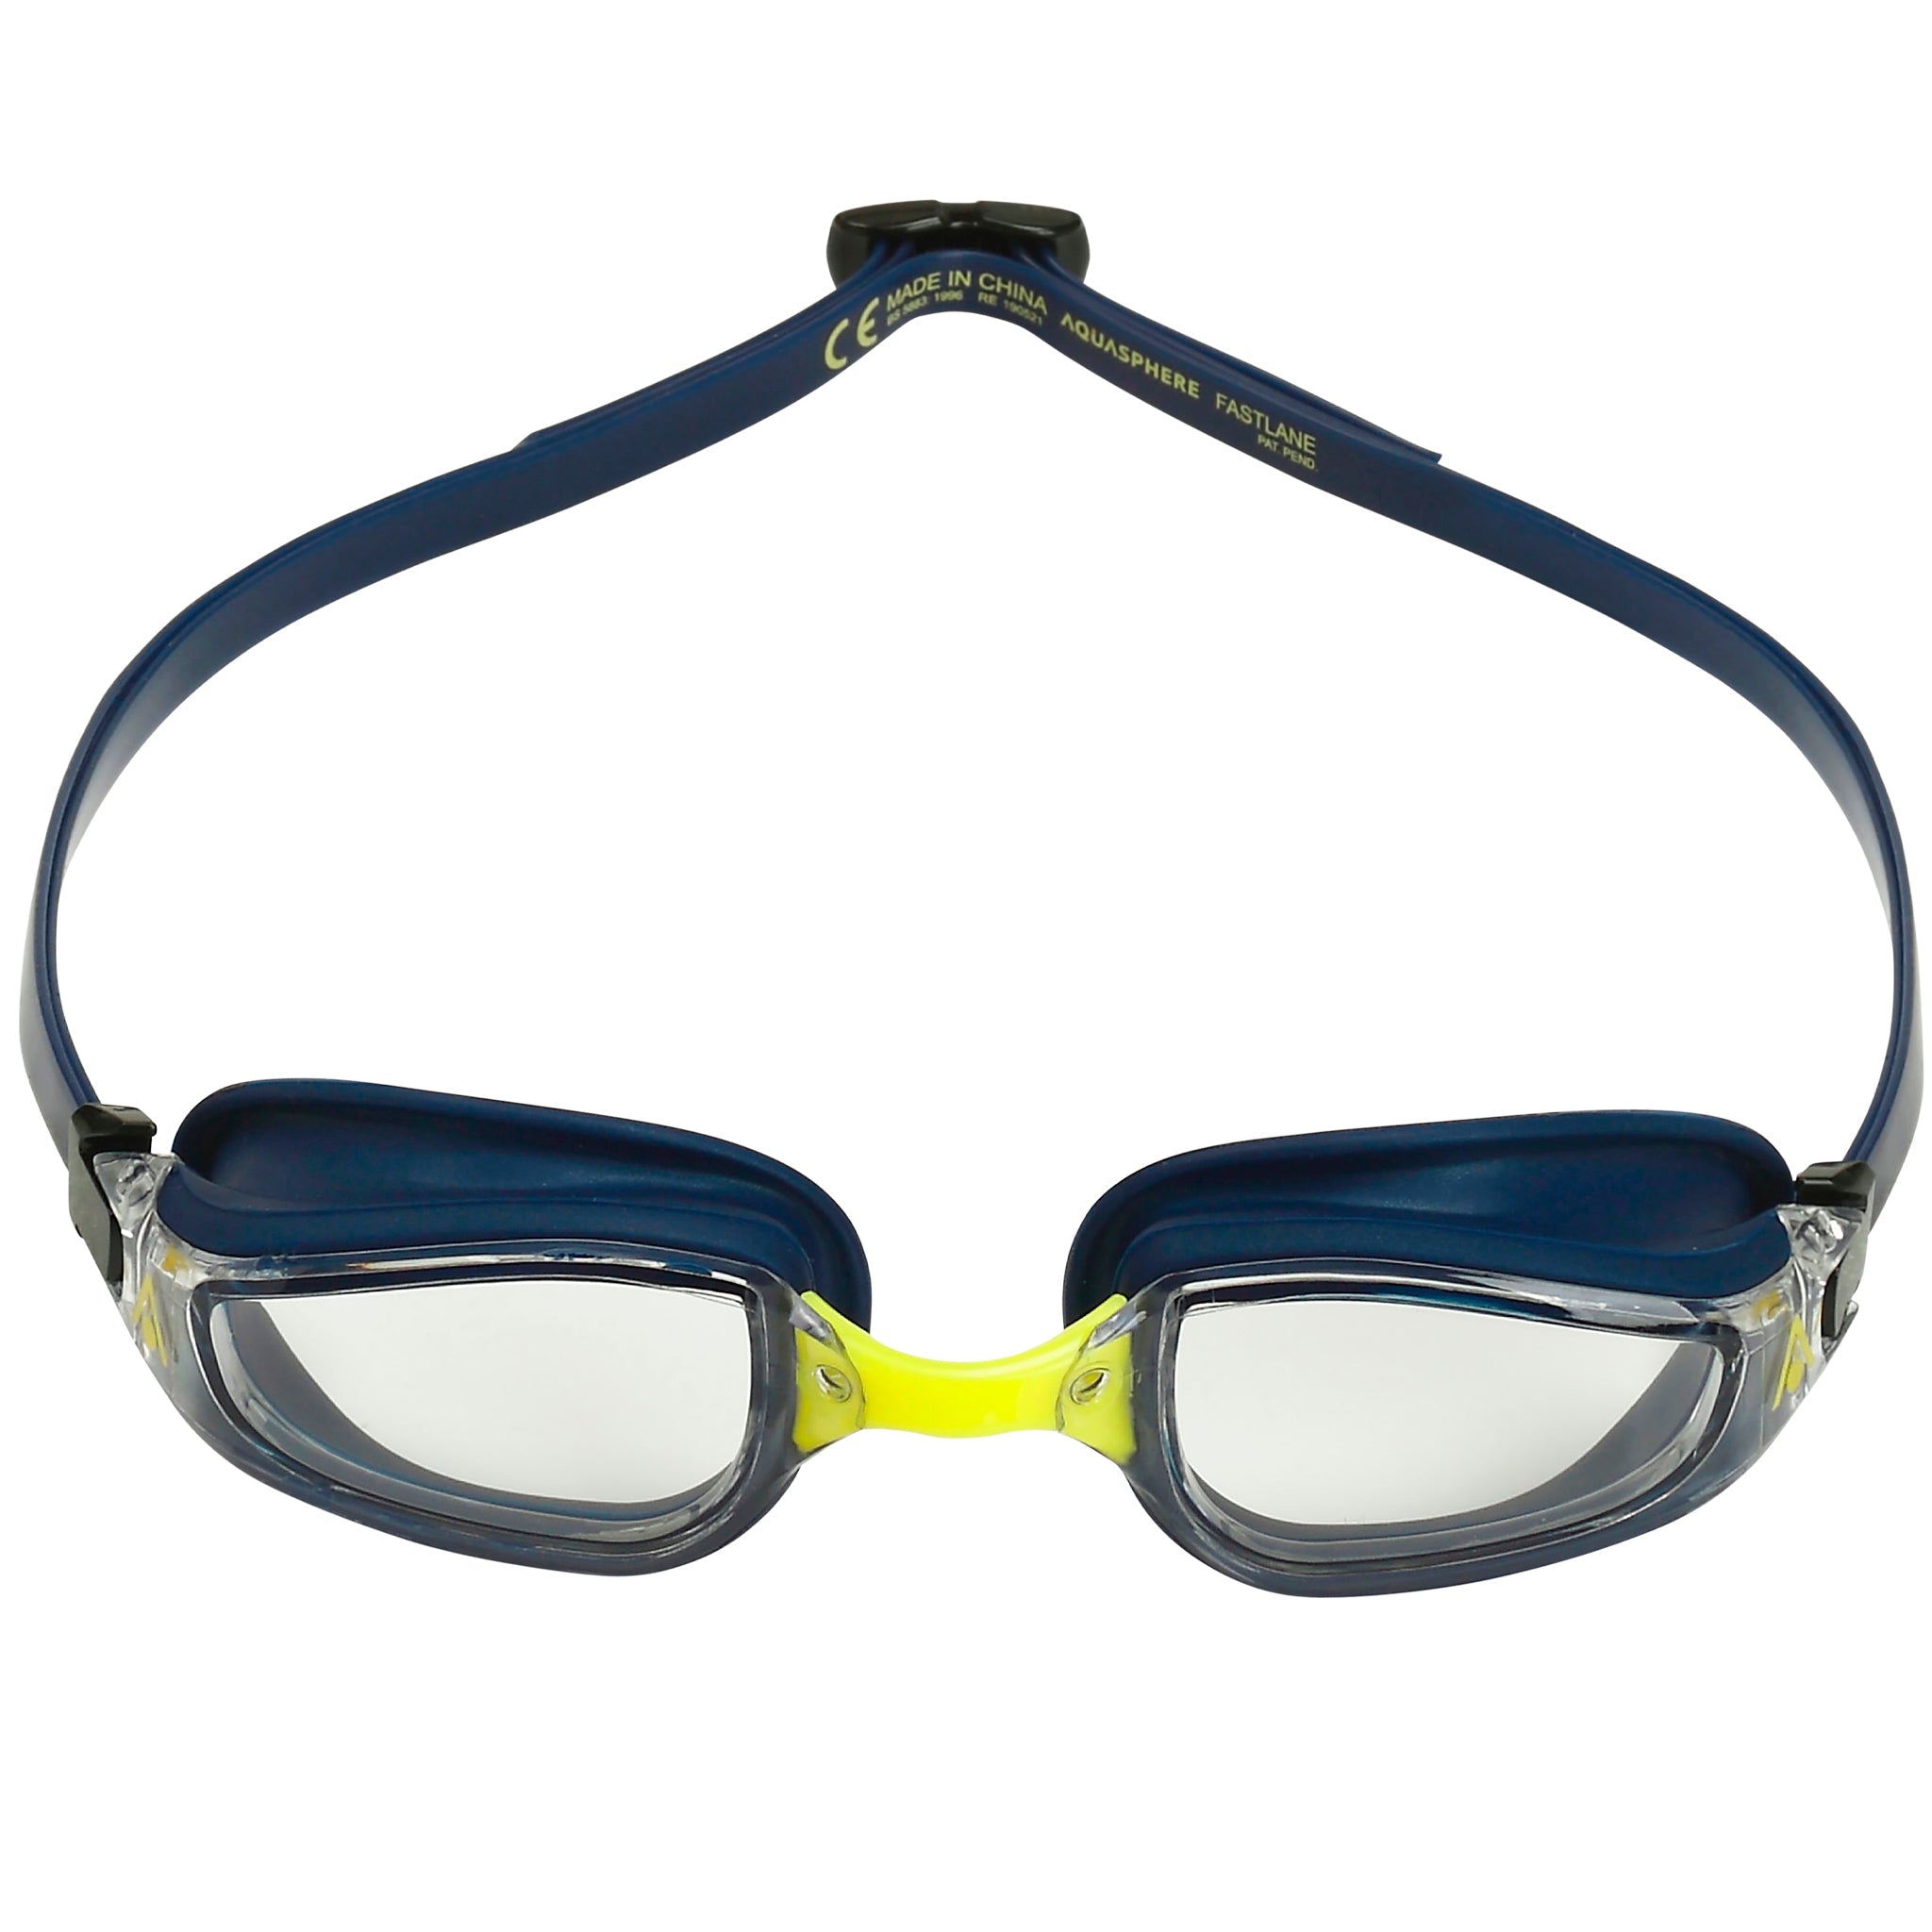 Aquasphere Fastlane Swimming Goggles Clear Lenses | Front